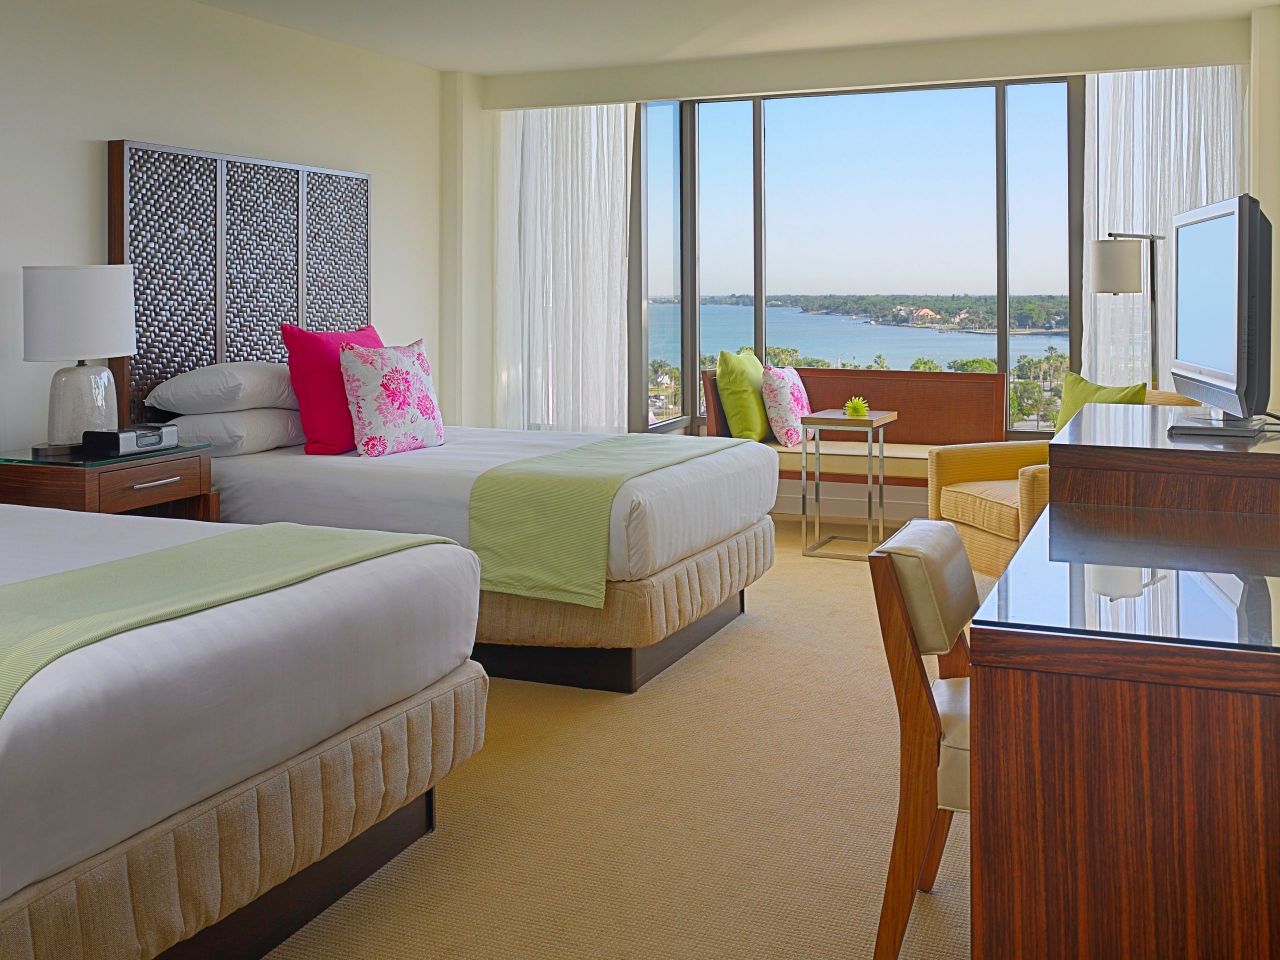  Sarasota  Bay Waterfront Hotel and Marina Hyatt  Regency  